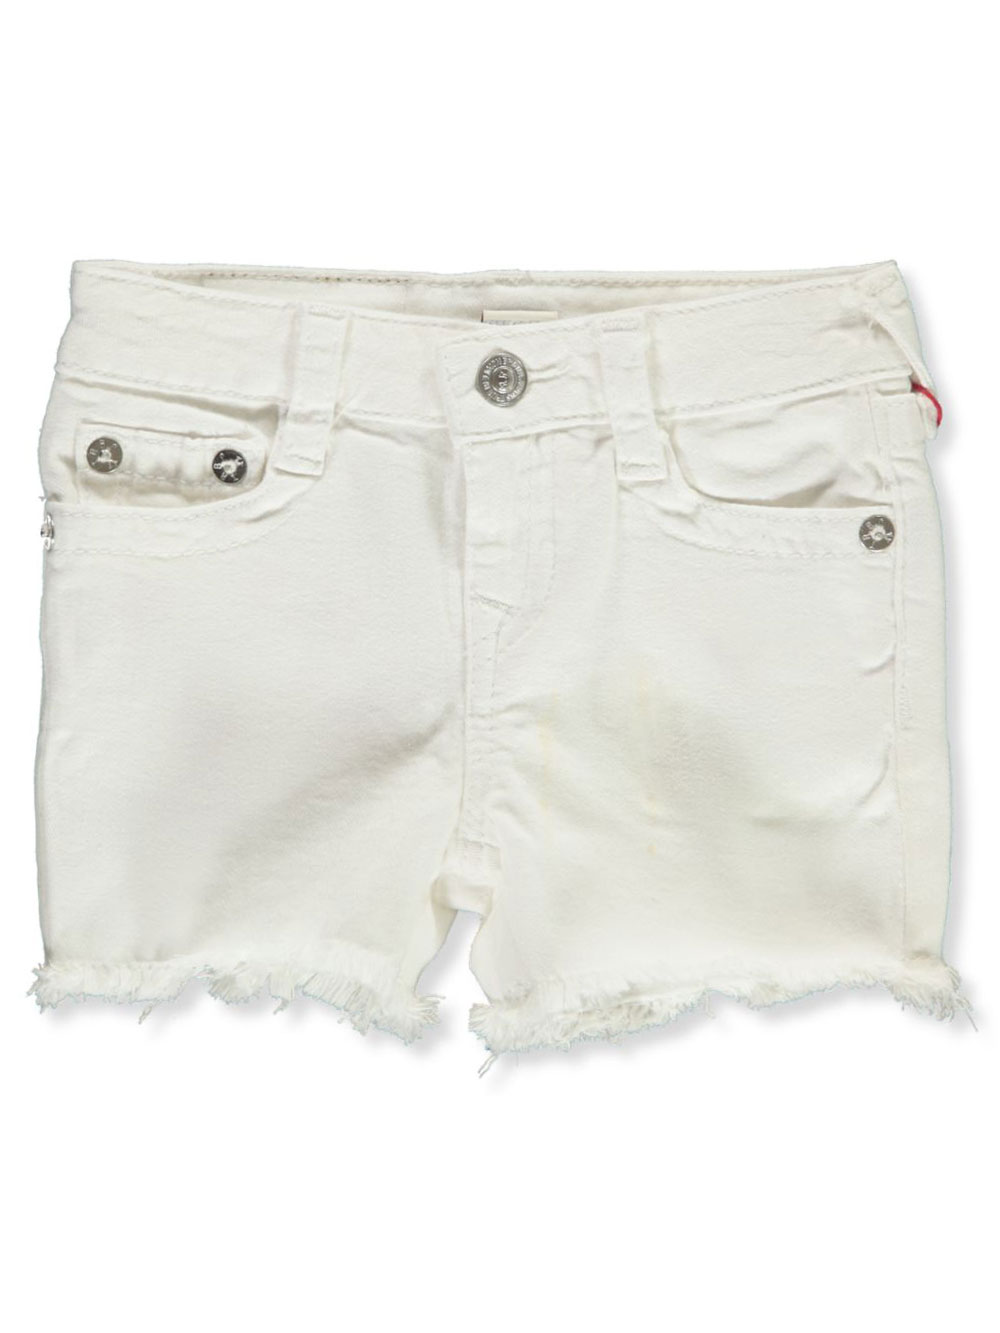 true religion shorts white